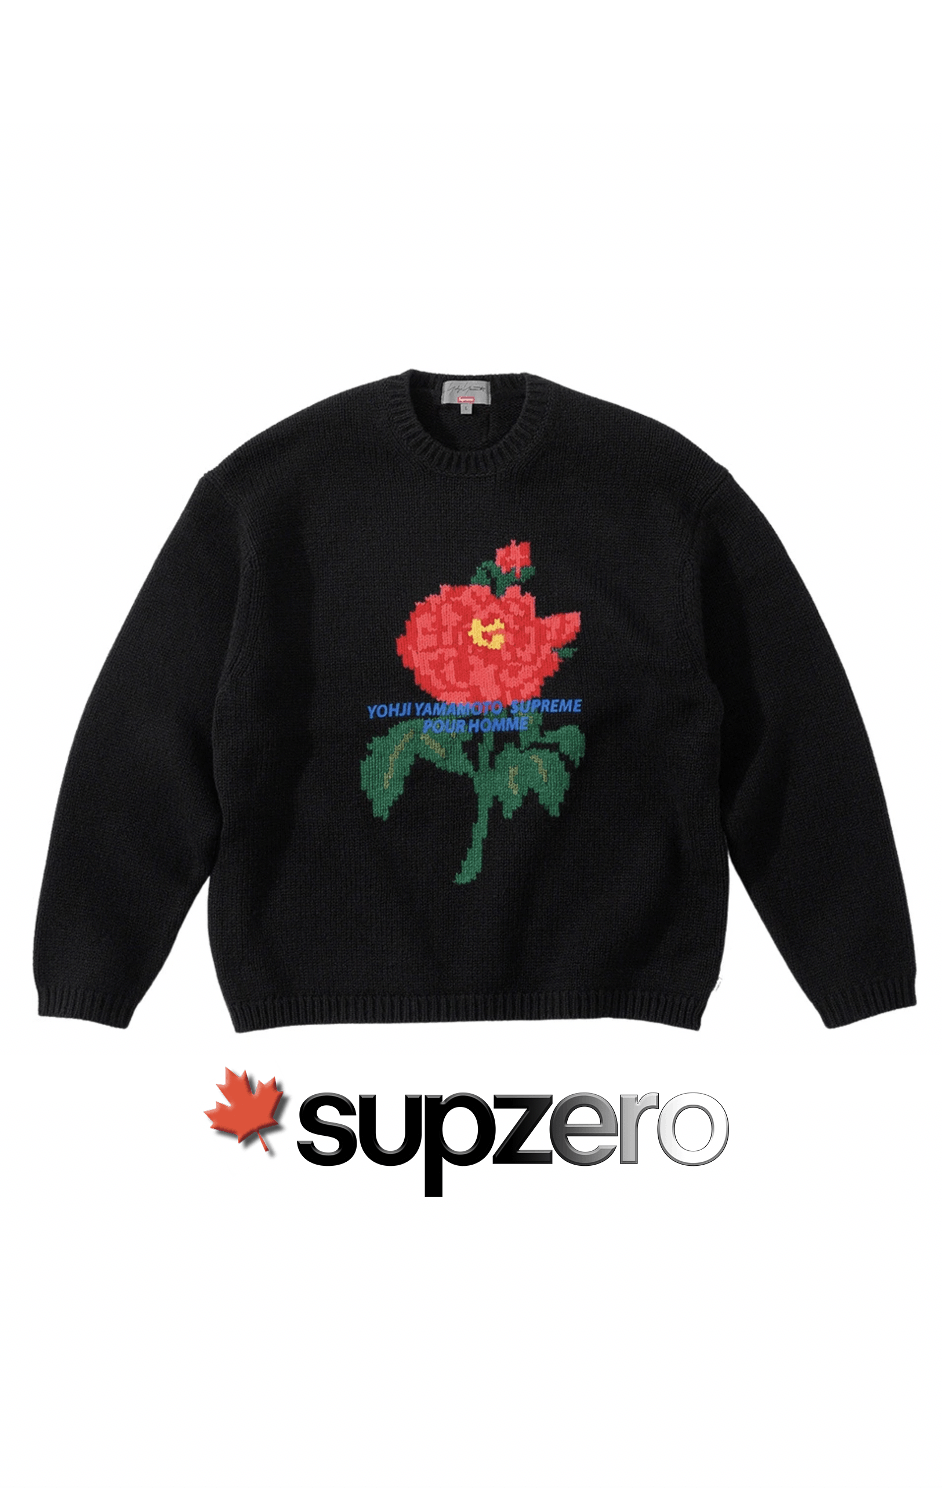 Supreme Supreme Yohji Yamamoto Knit Sweater Black Size XL FW20 Y3 | Grailed